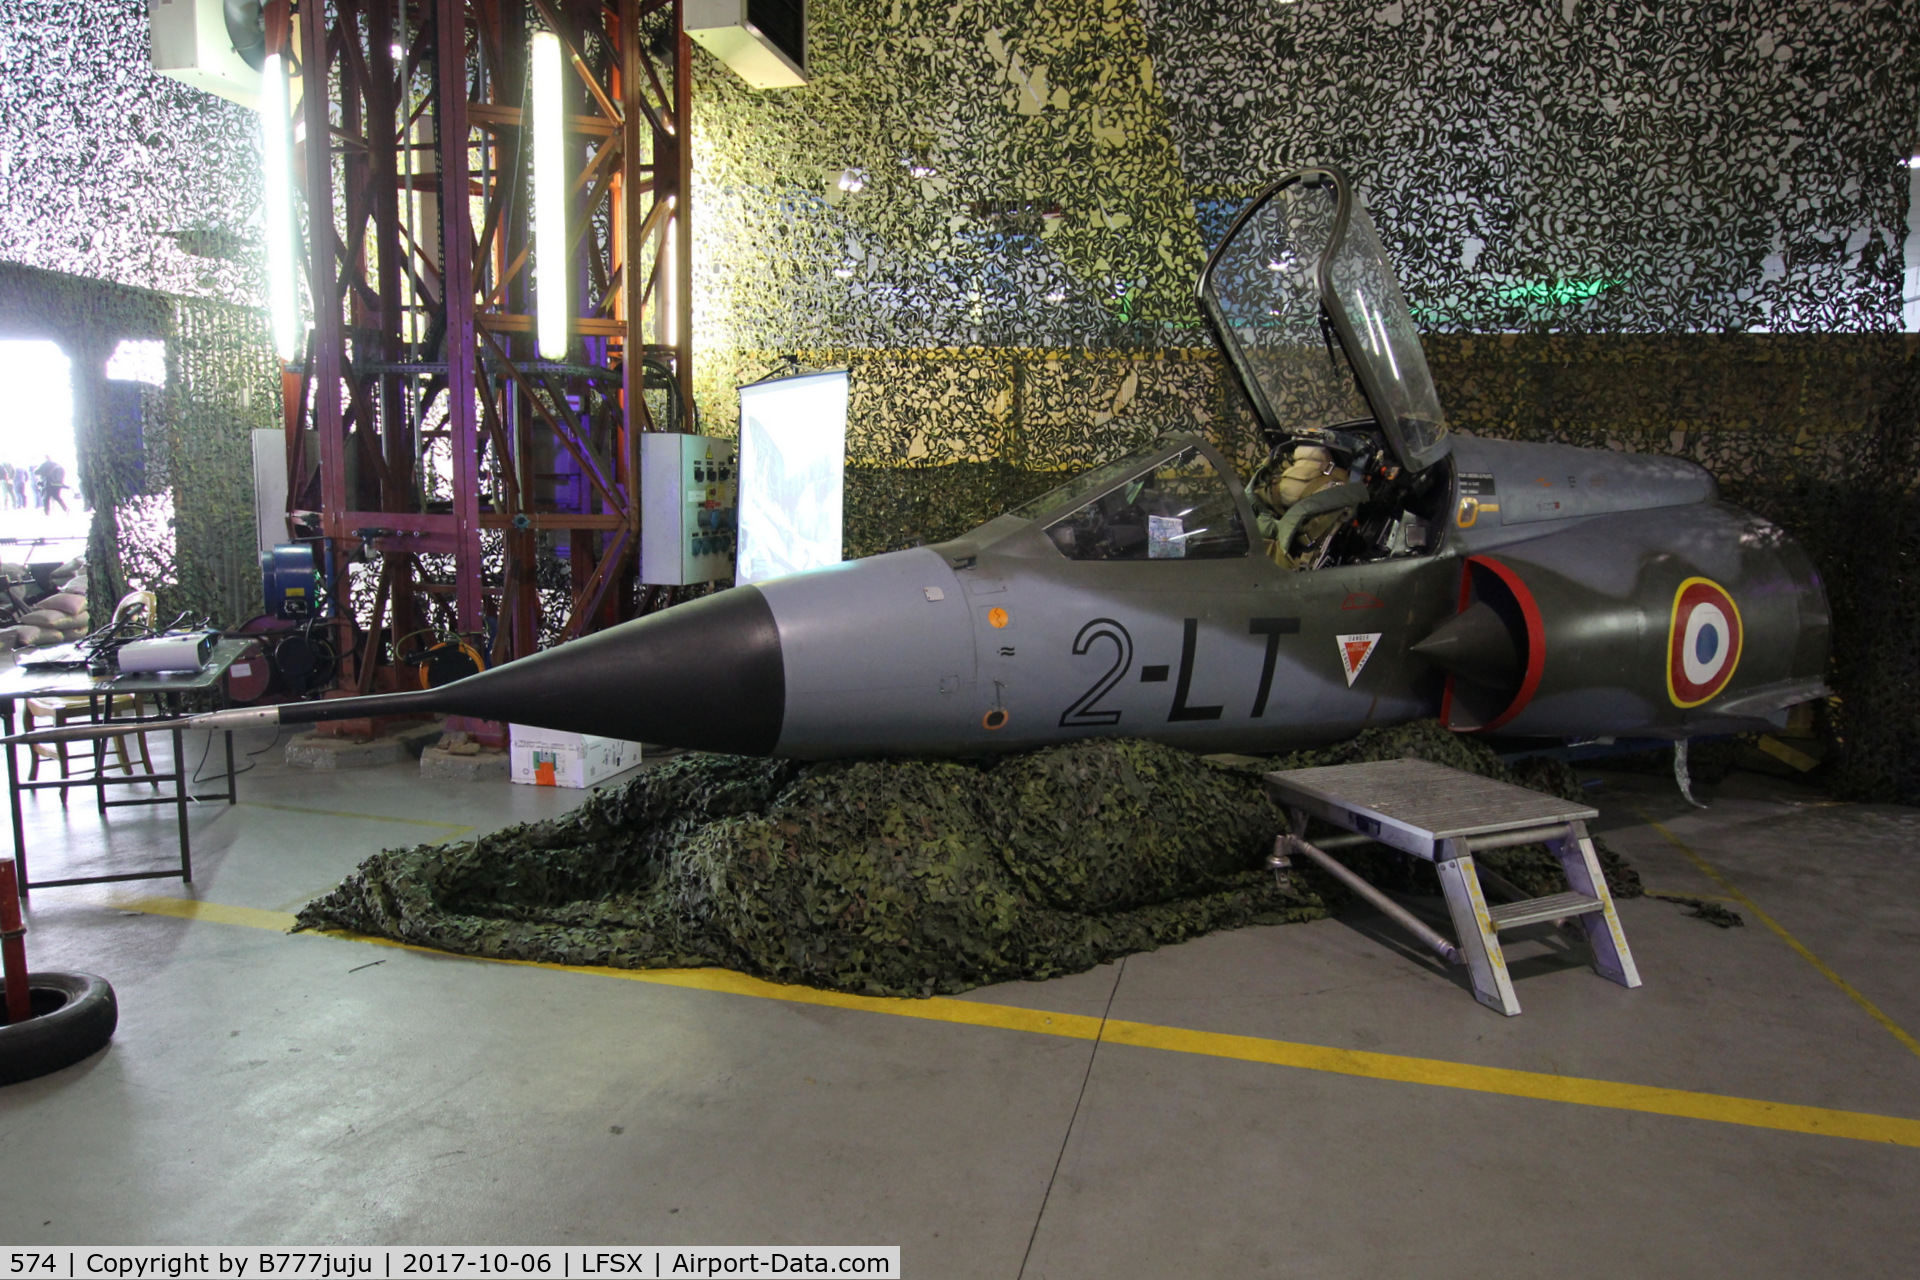 574, Dassault Mirage IIIE C/N 574, ex Dijon Air Base Museum
Centenaire de la mort du Cne Guynemer